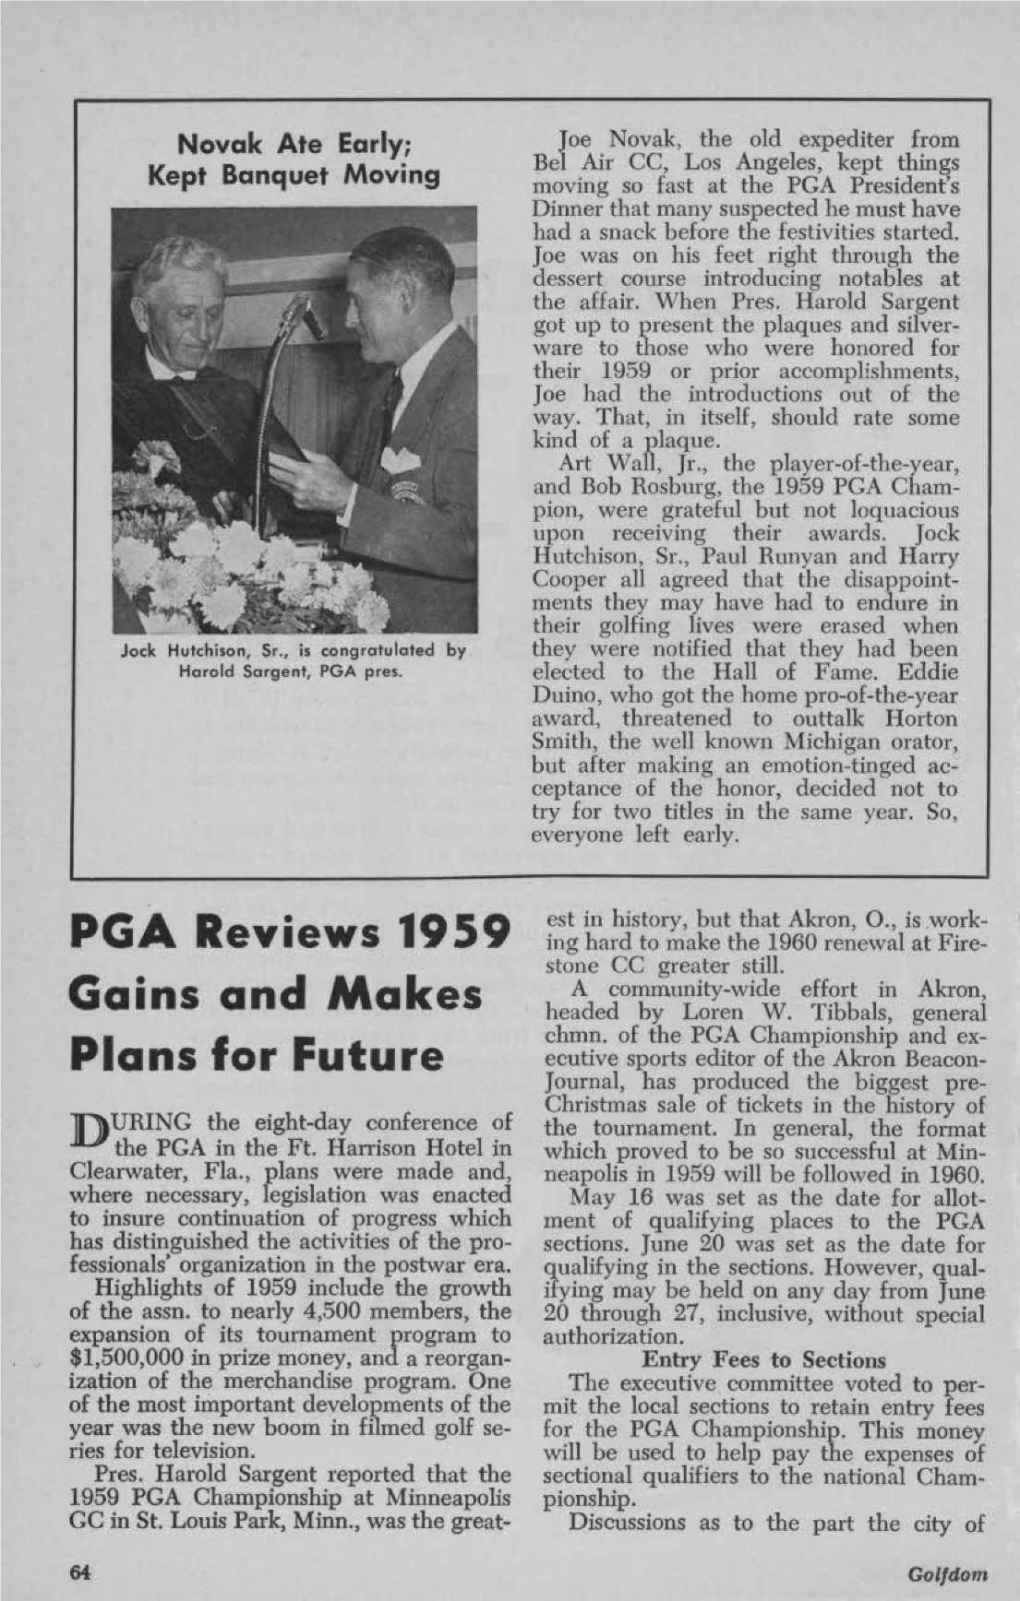 PGA Reviews 1959 Gains and Makes Plans Lor Future